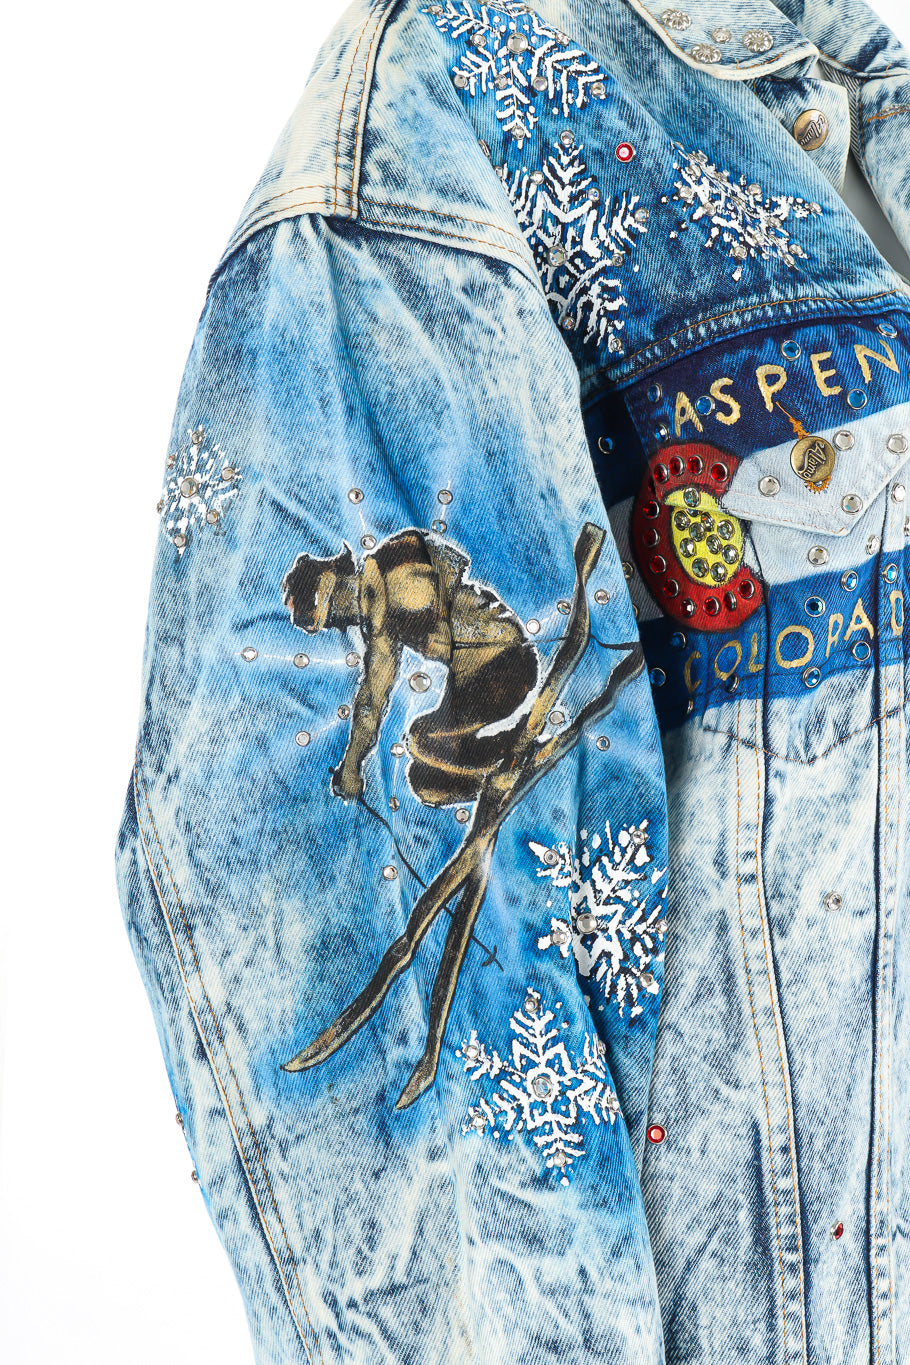 Aspen Colorado jacket by Tony Alamo on mannequin skiier close  @recessla